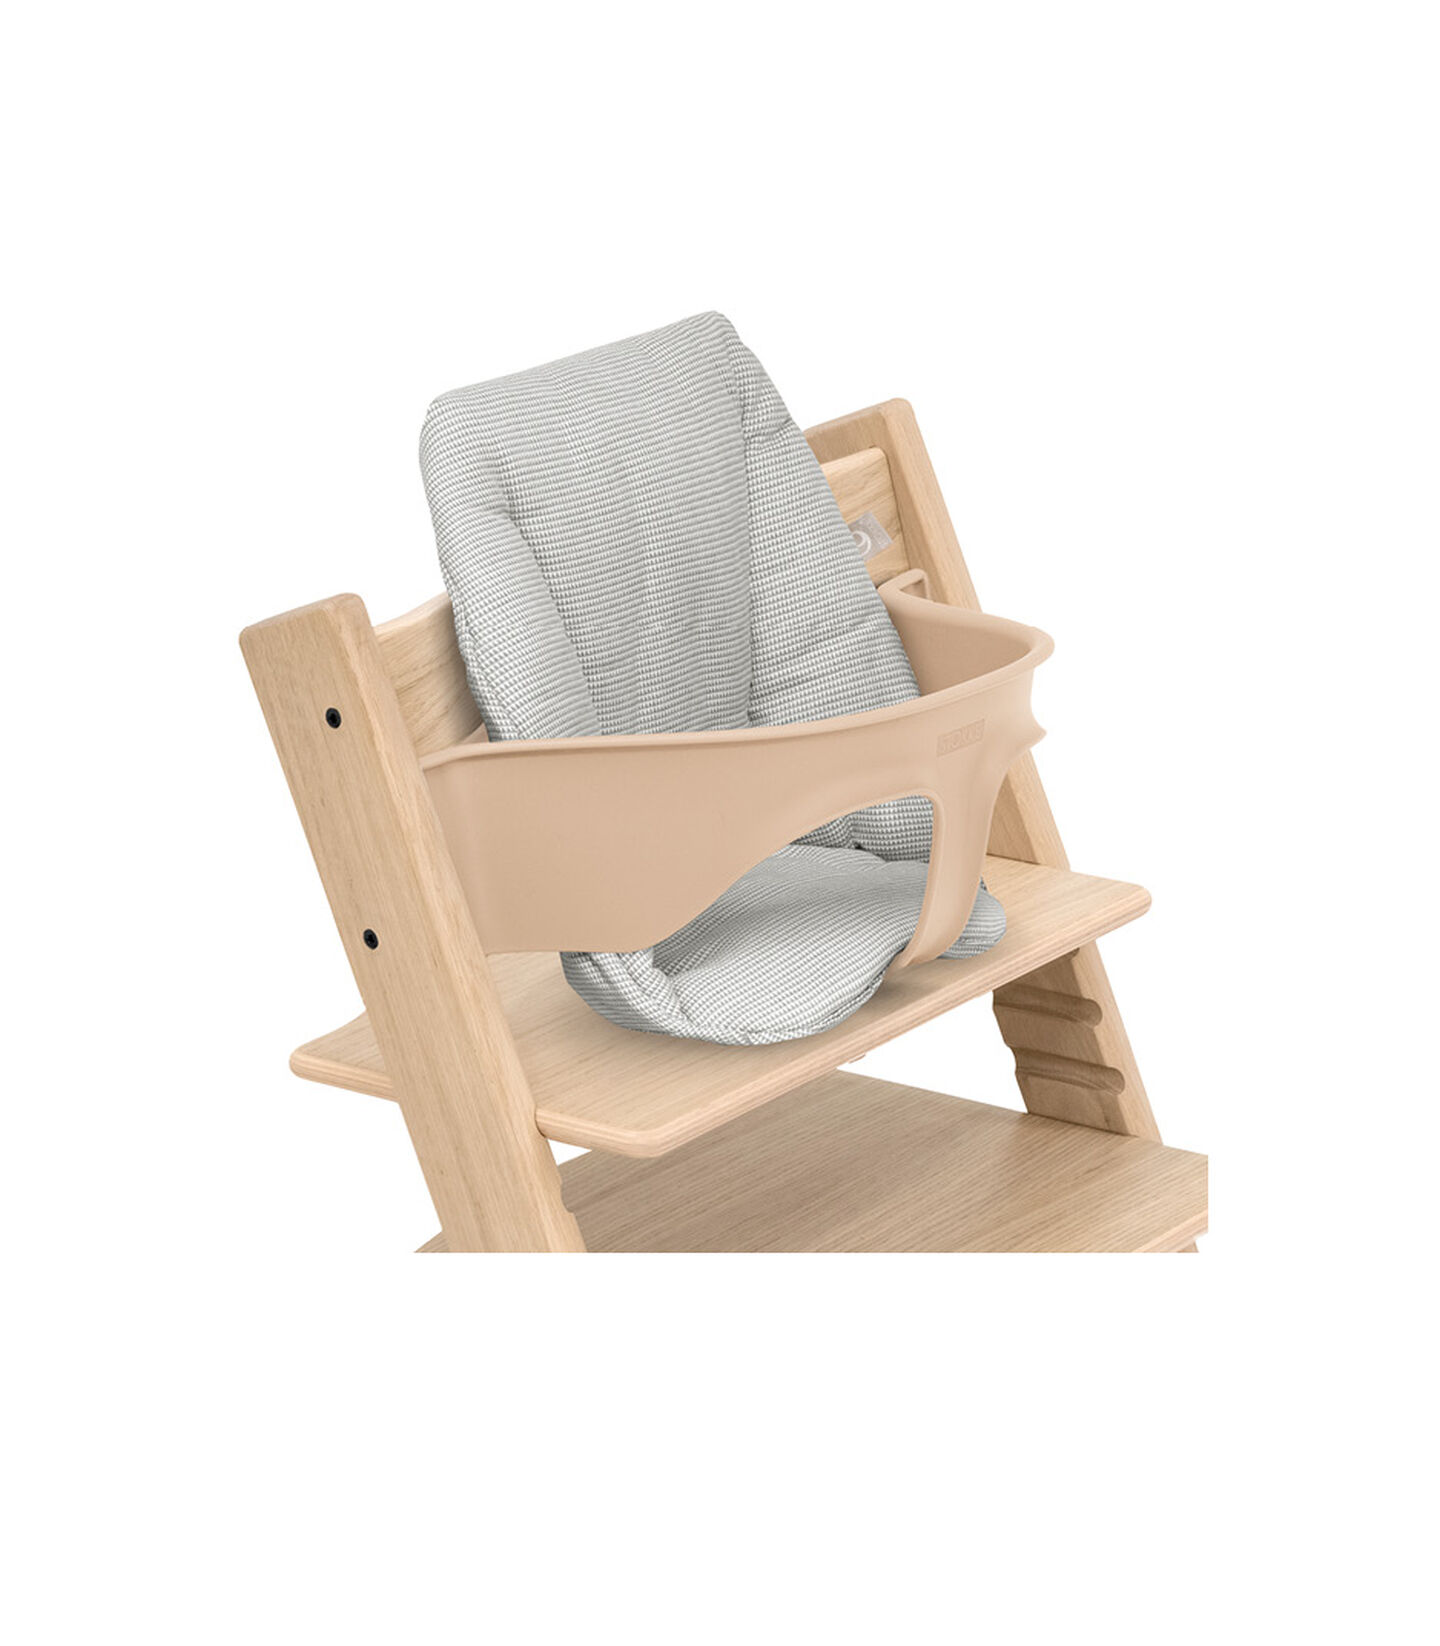 Подушка для малышей Mini на стульчик Tripp Trapp® Nordic Grey, Nordic Grey / Скандинавский серый, mainview view 2